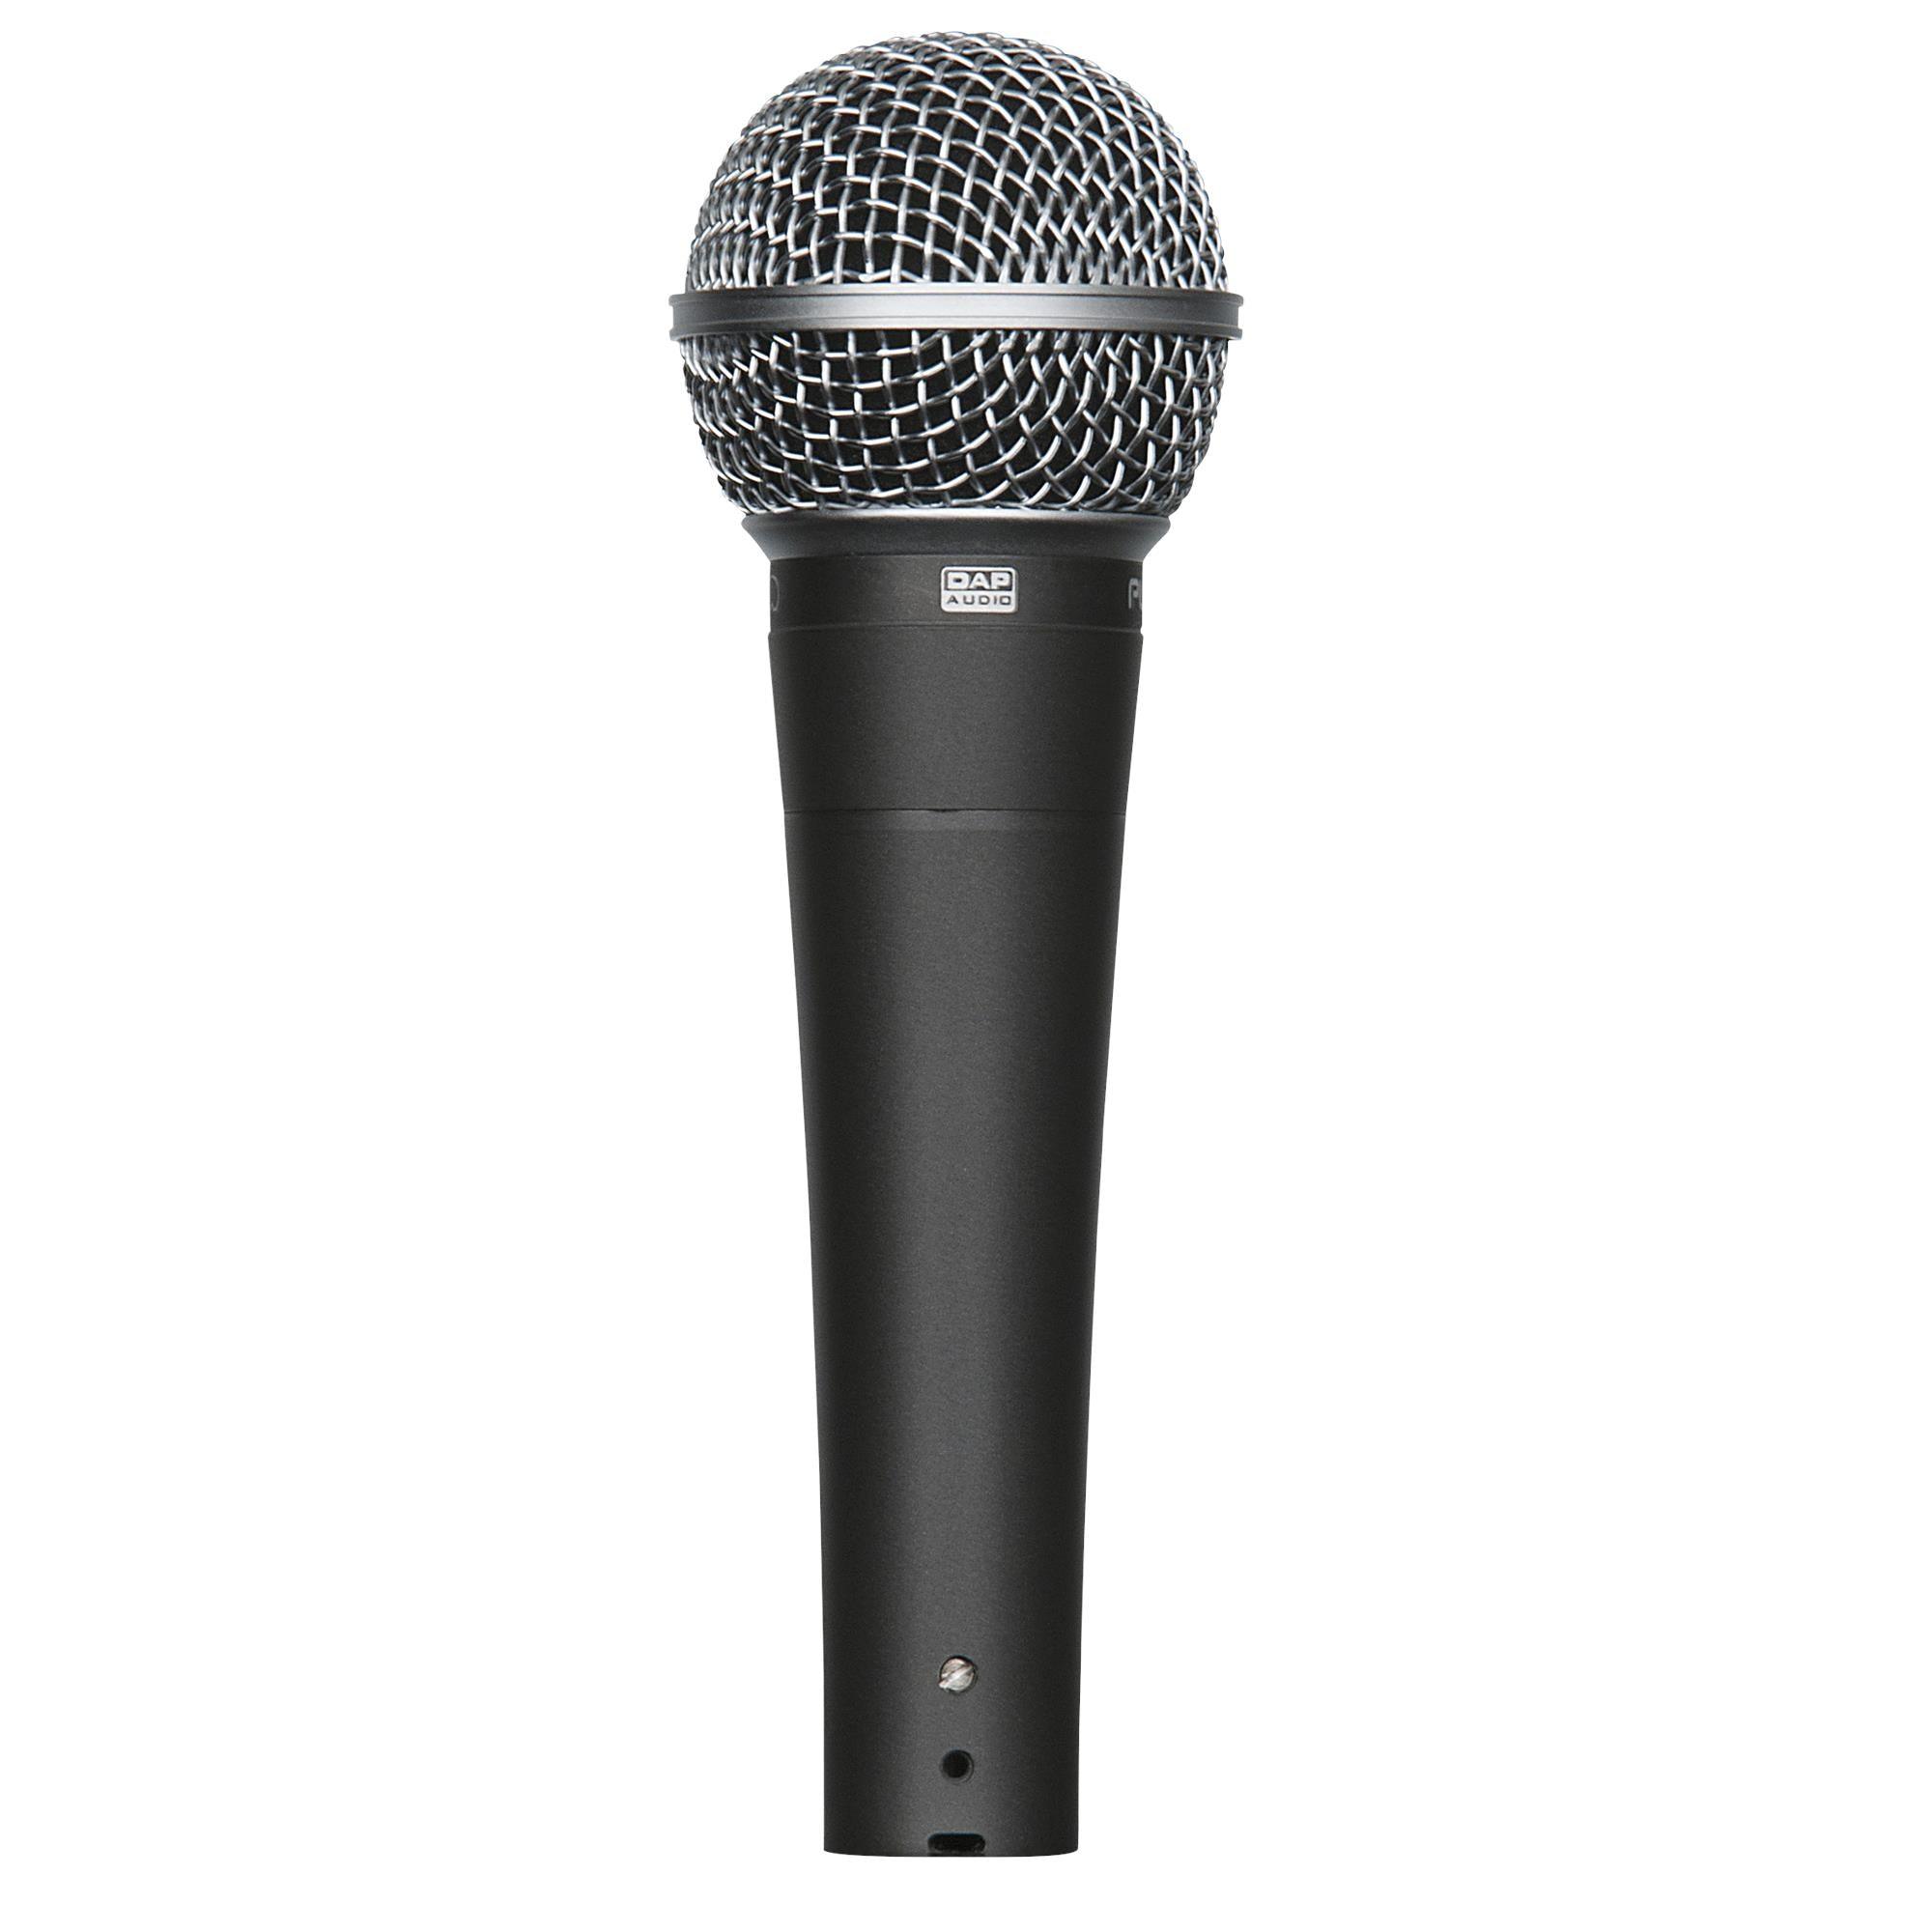 DAP PL-08 Dynamic Vocal Microphone - DY Pro Audio